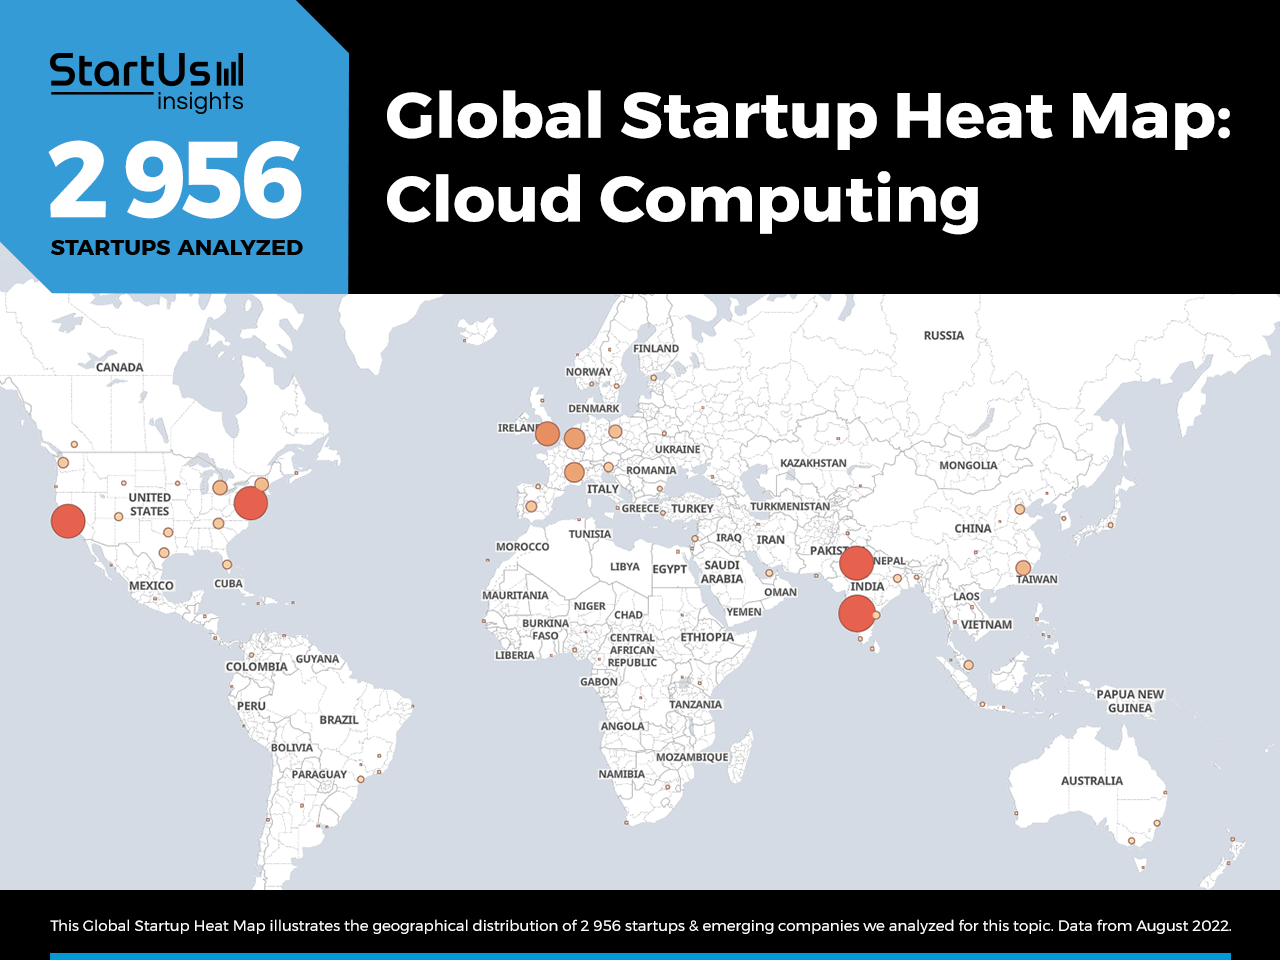 Cloud-Computing-startups-Heat-Map-StartUs-Insights-noresize